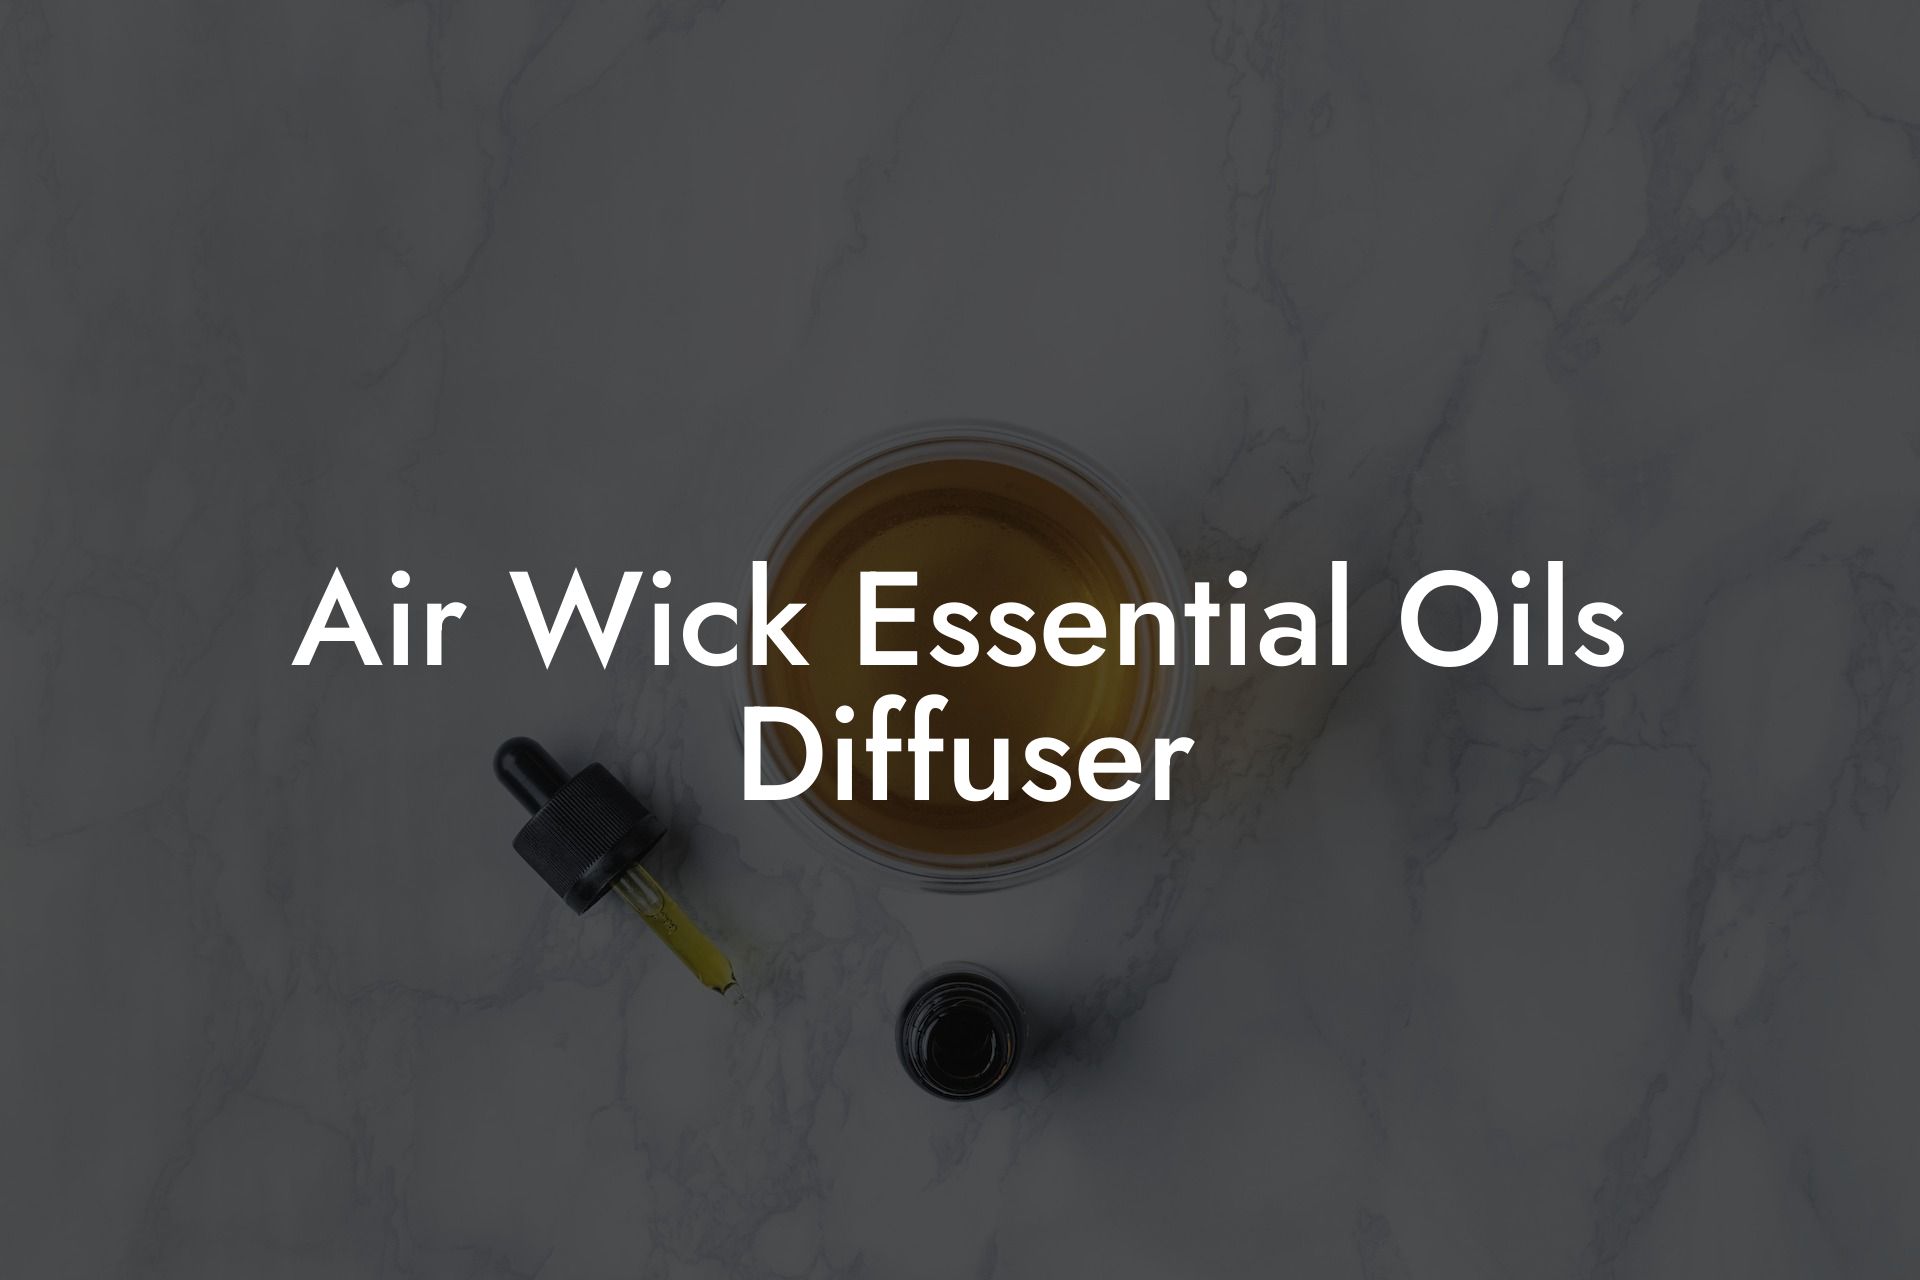 Air Wick Essential Oils Diffuser